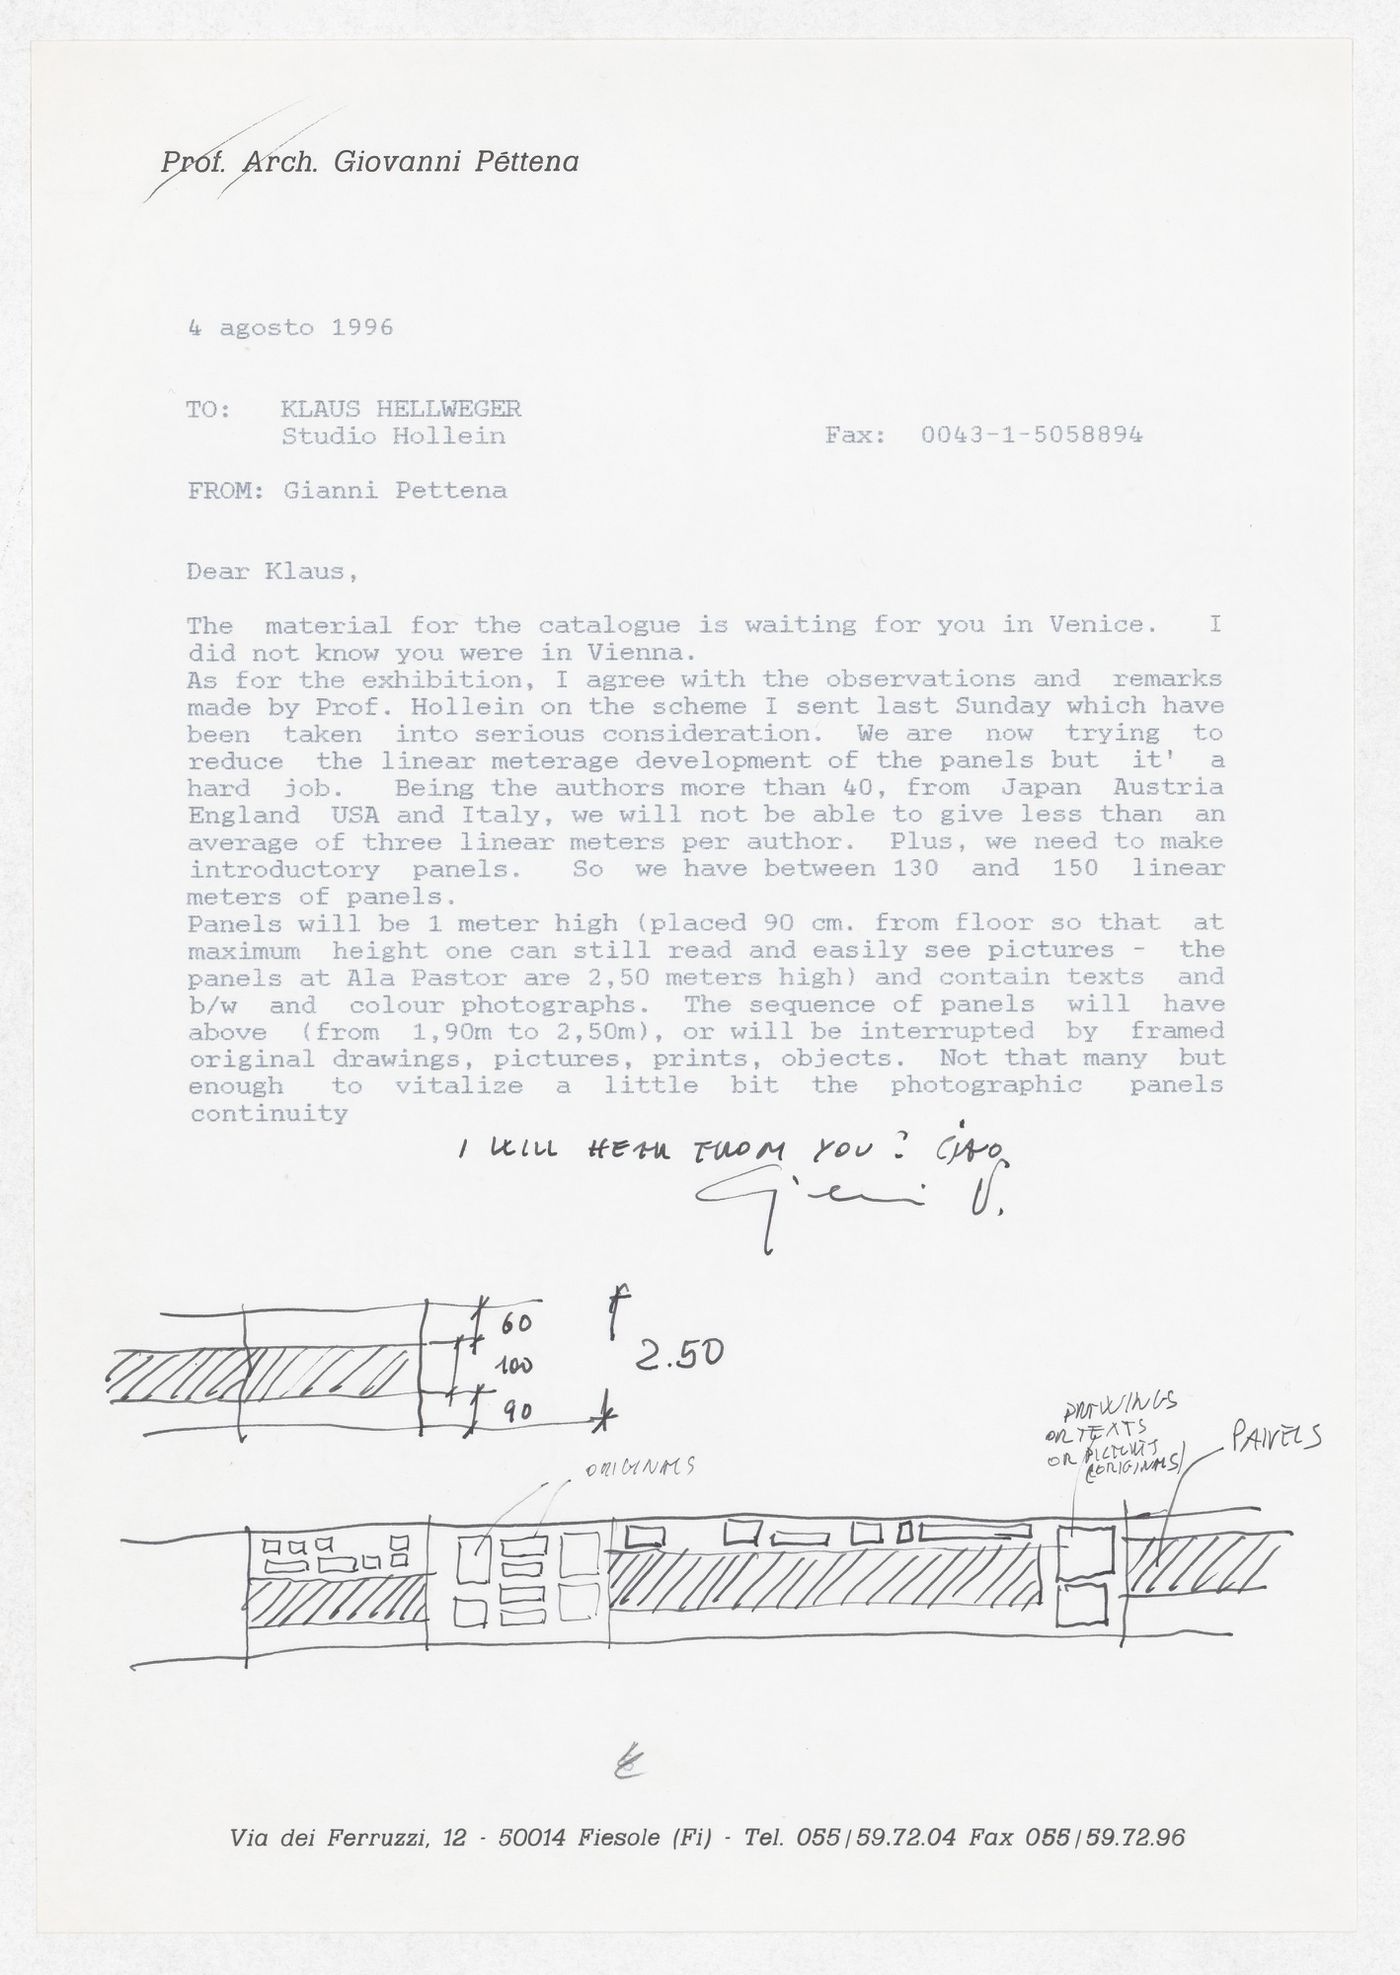 Correspondence to Klaus Hellweger of Studio Hollein regarding the exhibition Radicals. Architecttura e Design 1960-1975